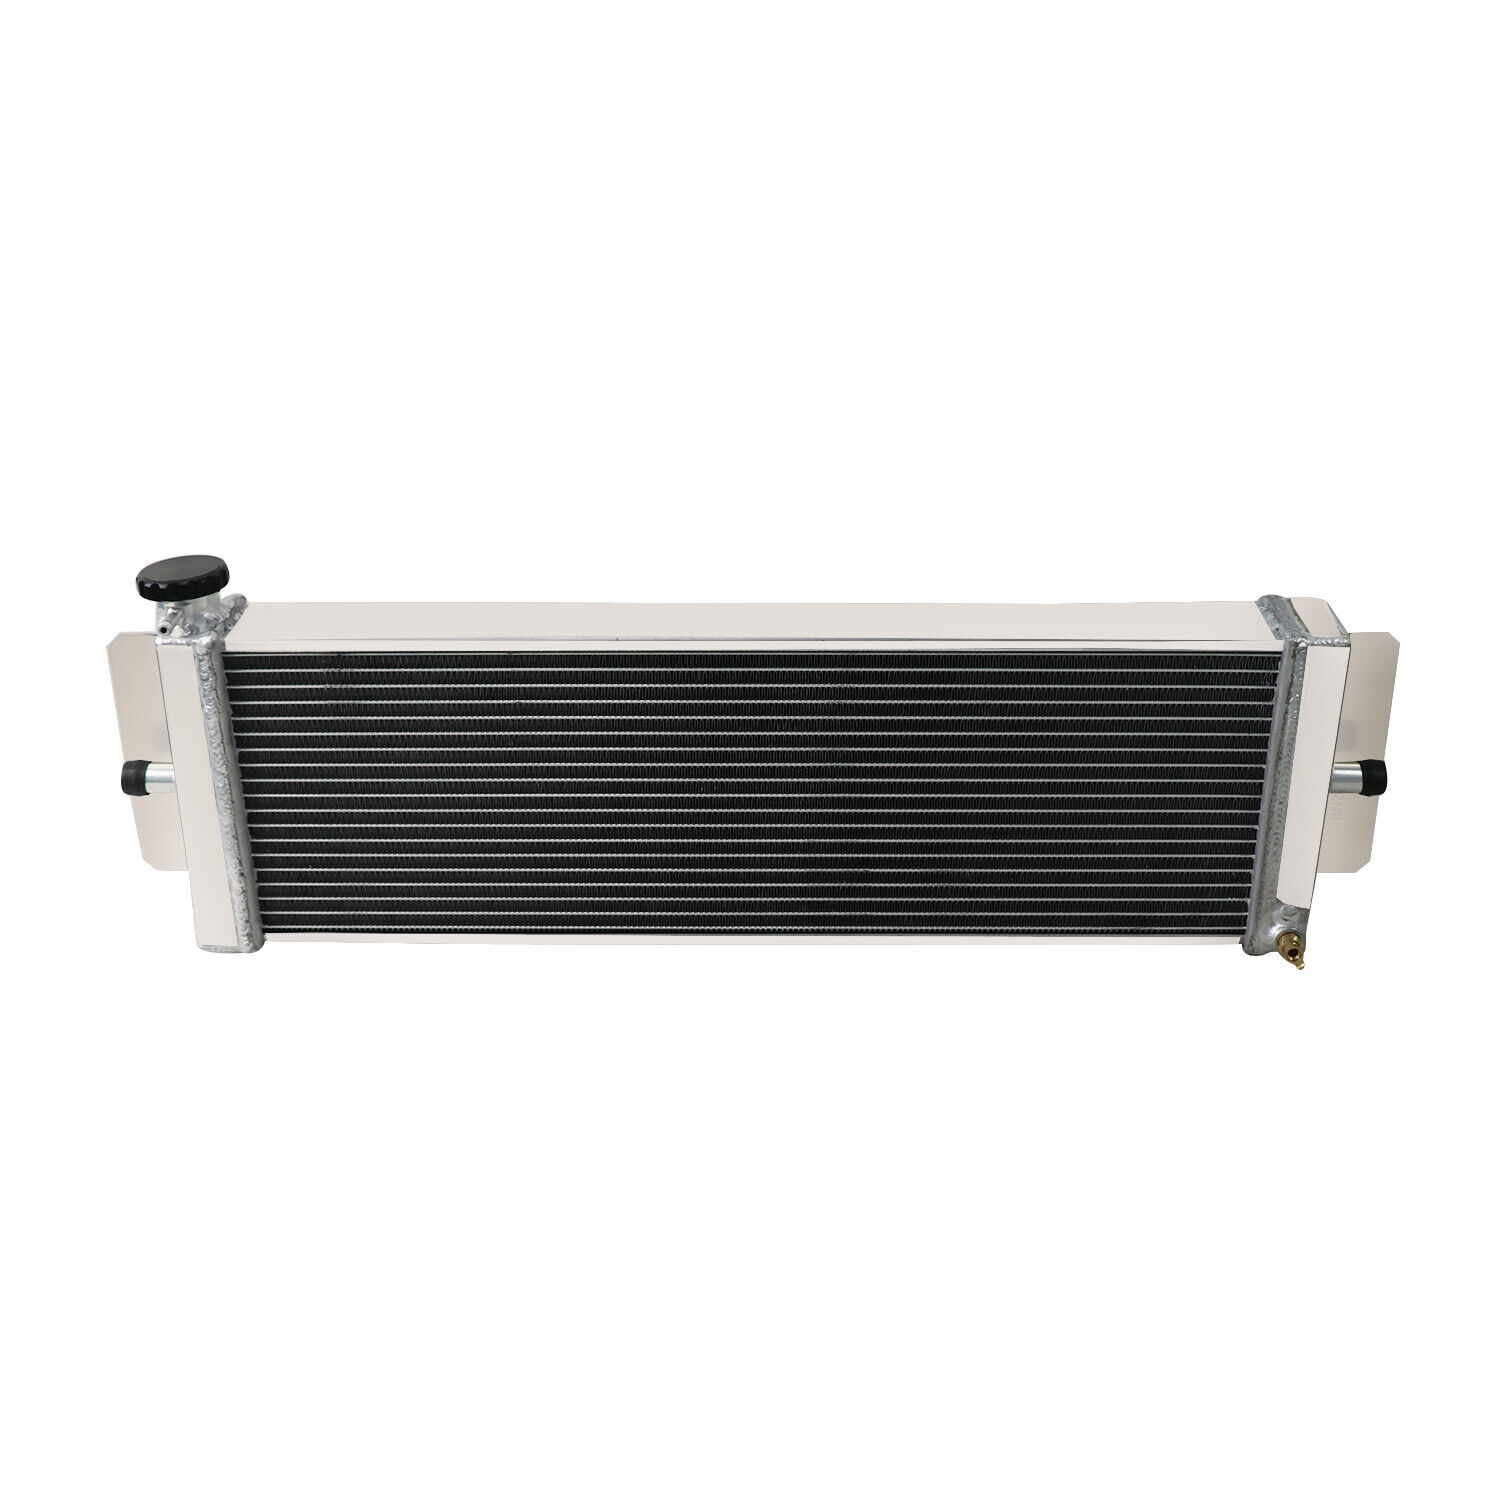 Full Aluminum Intercooler Radiator Universal Air to Water Liquid Heat Exchanger